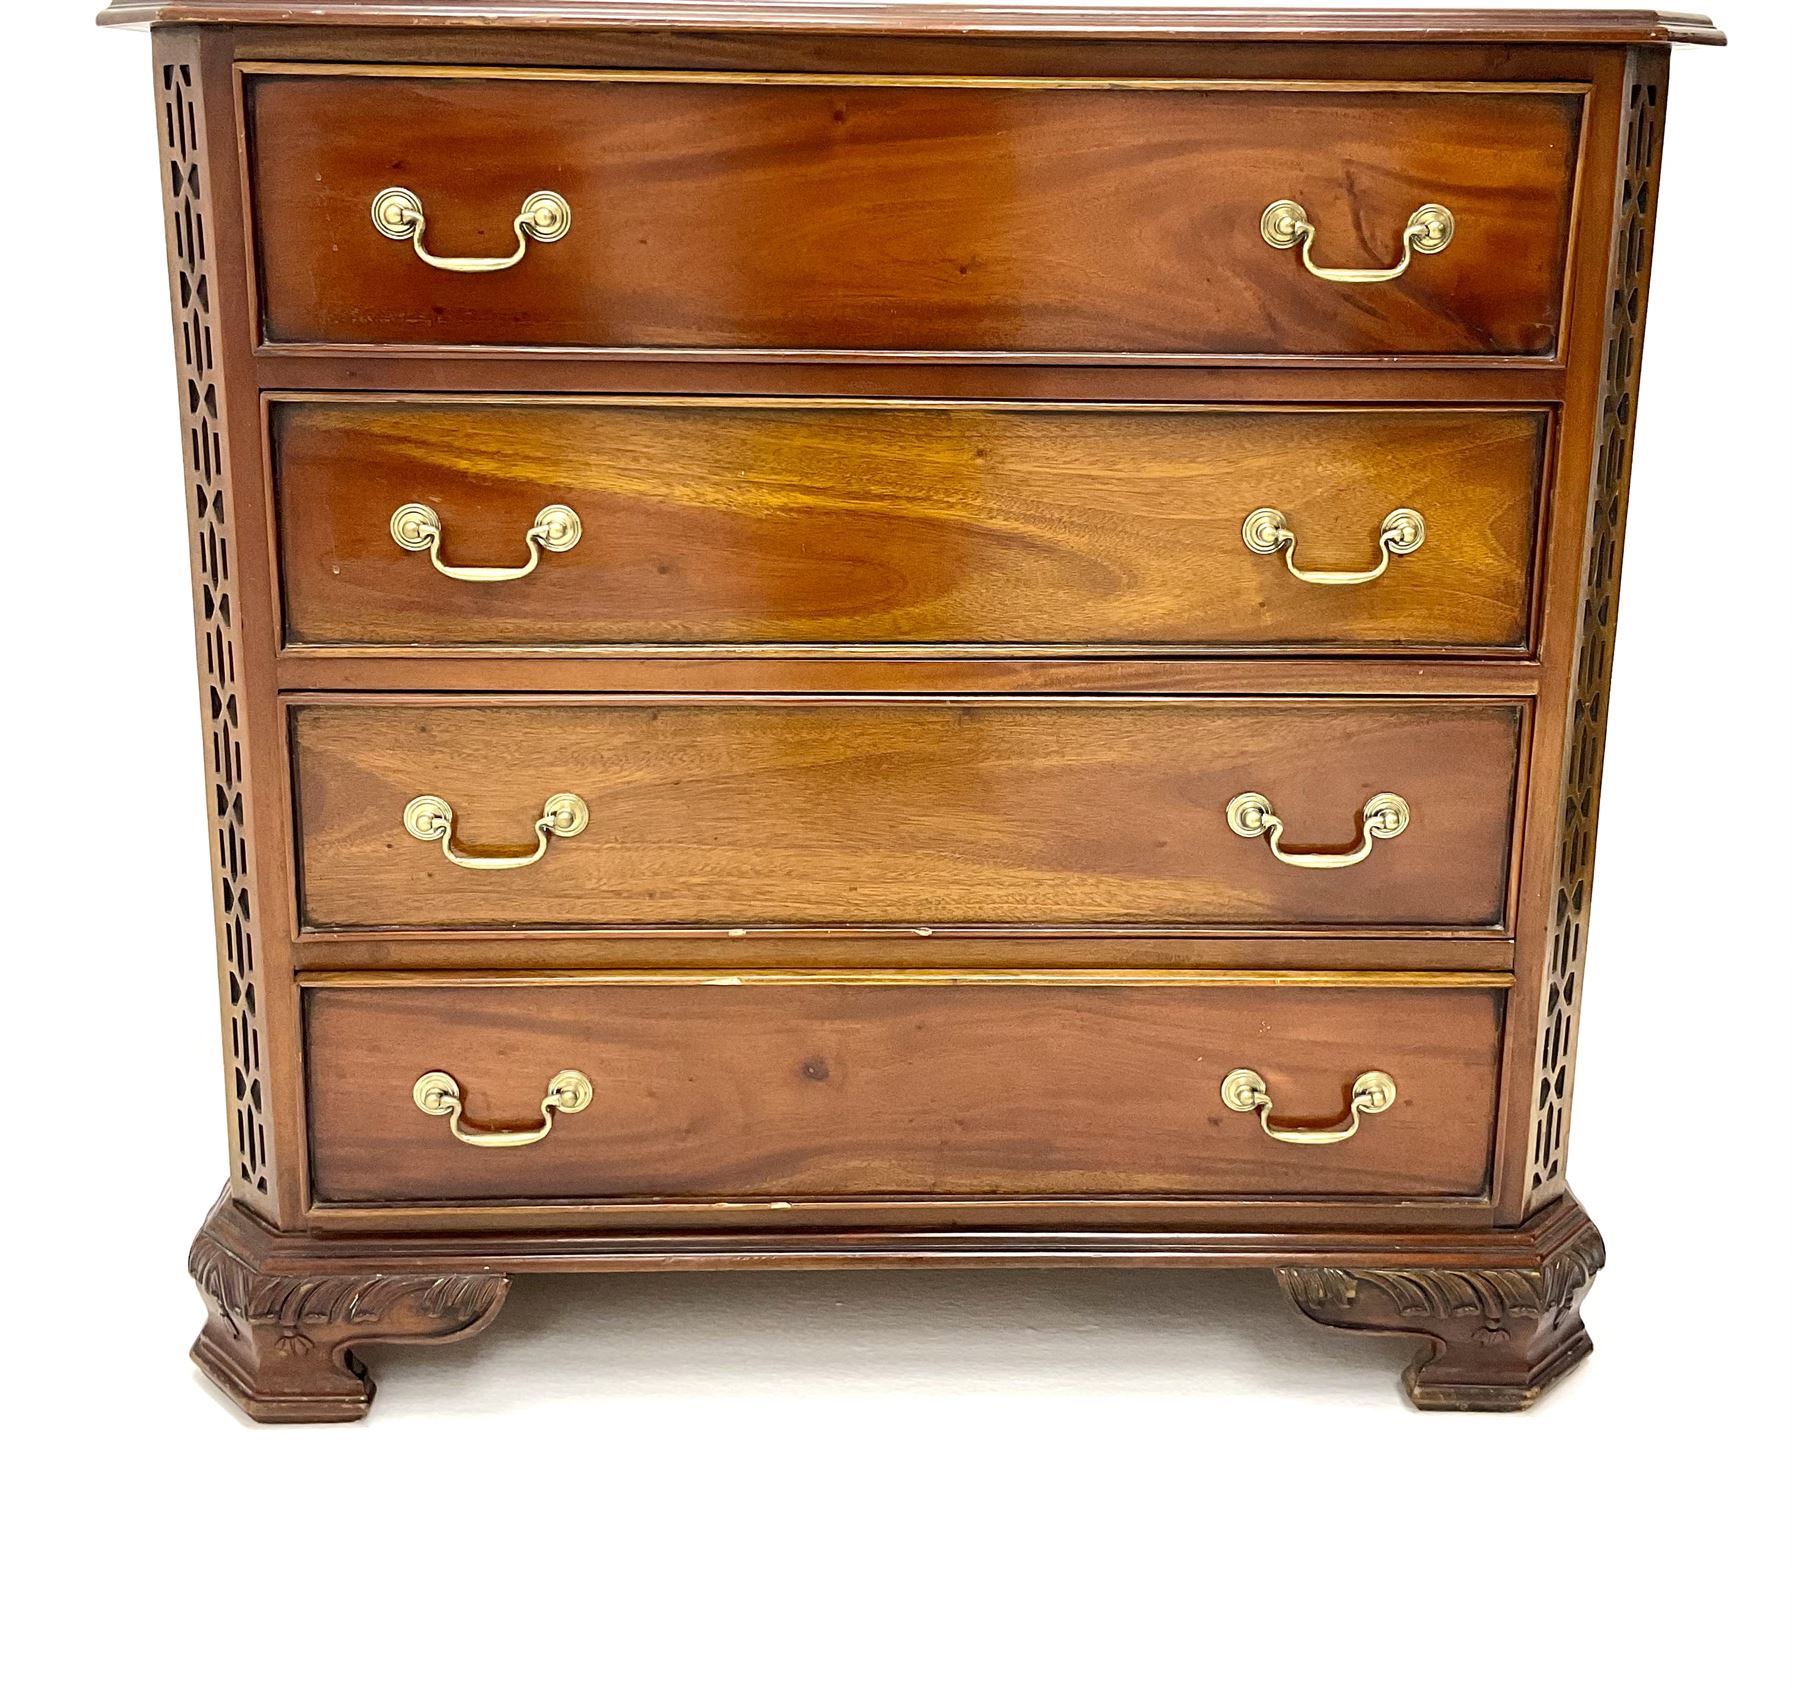 Georgian style mahogany chest - Image 2 of 5